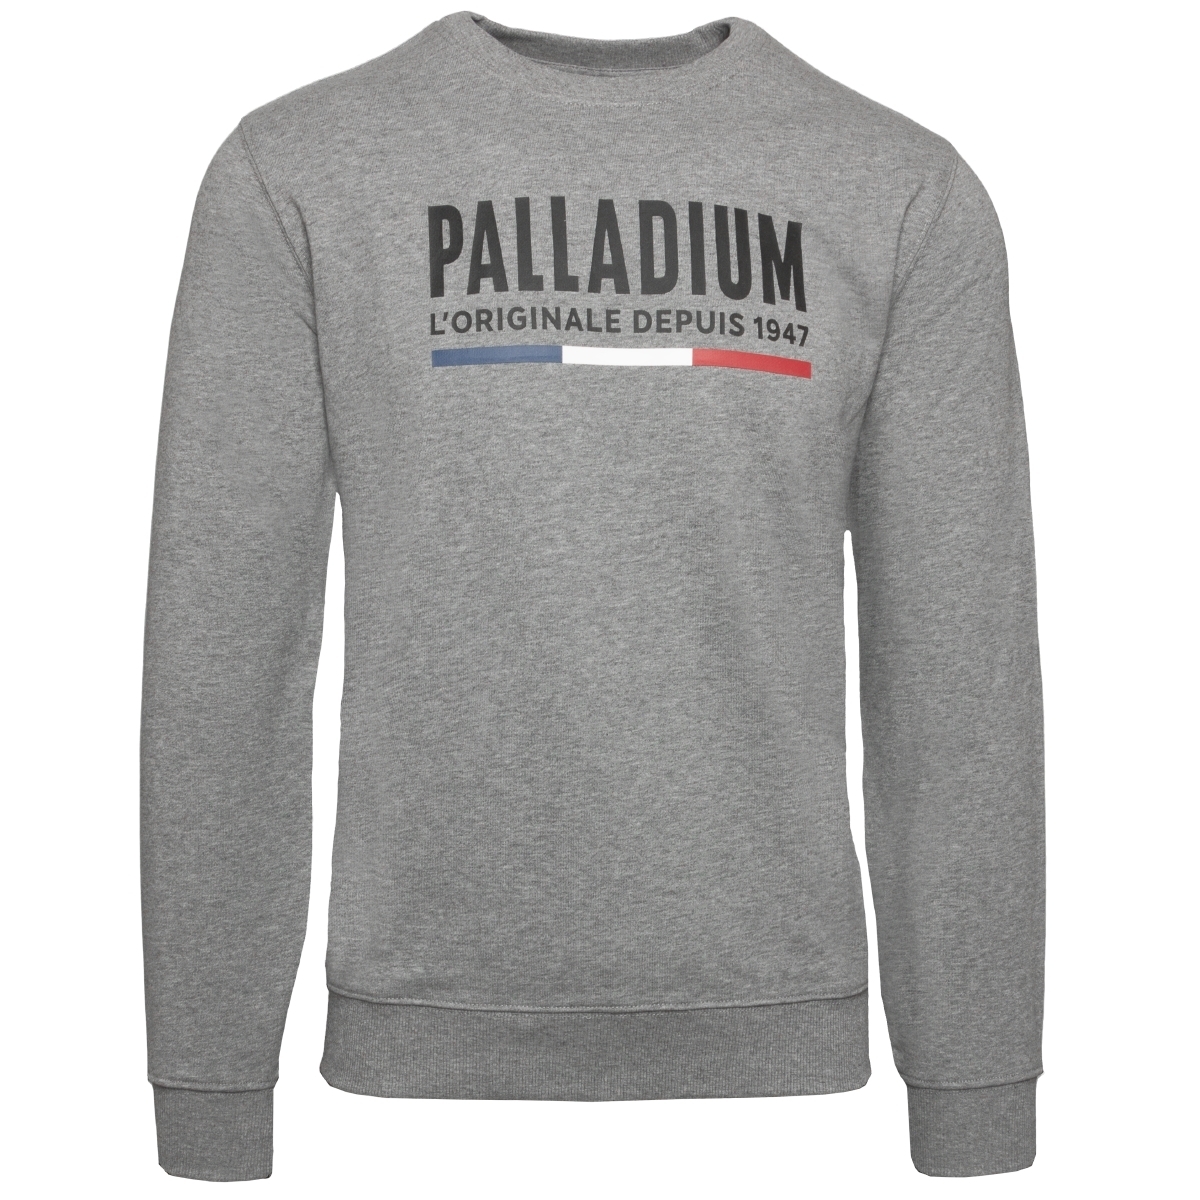 Palladium Originale France Sweatshirt grau